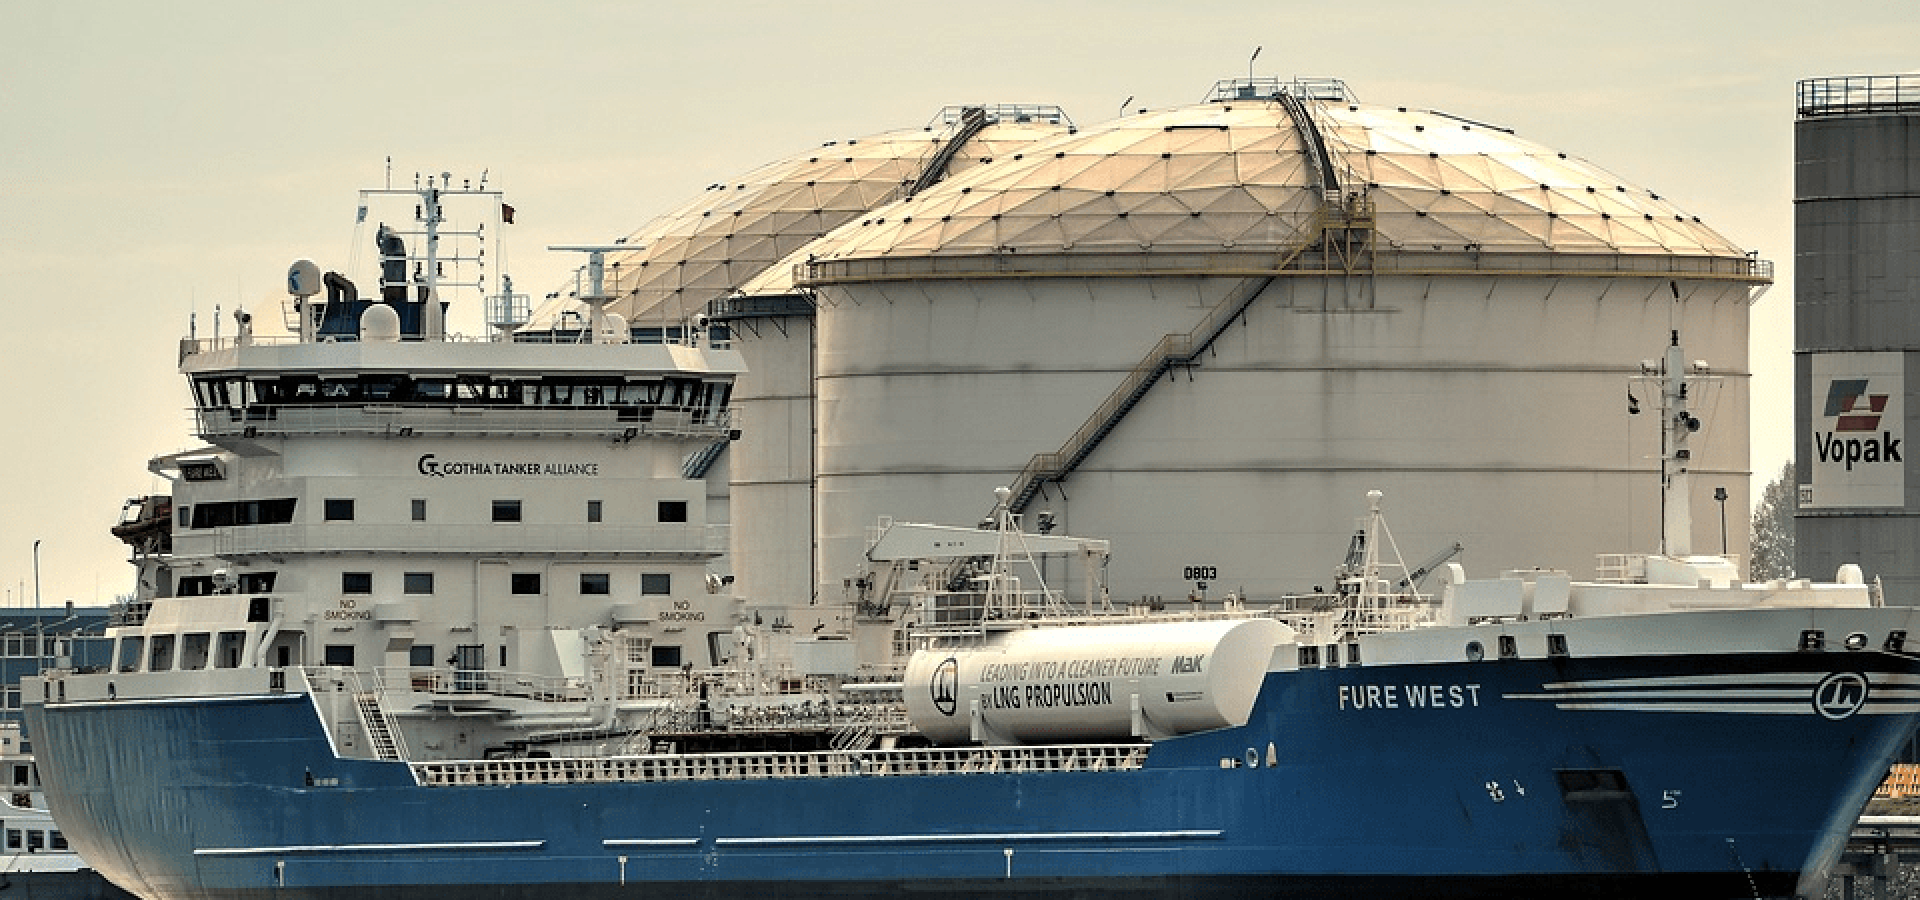 CCPC takes focus on Iran and Venezuela oil trade